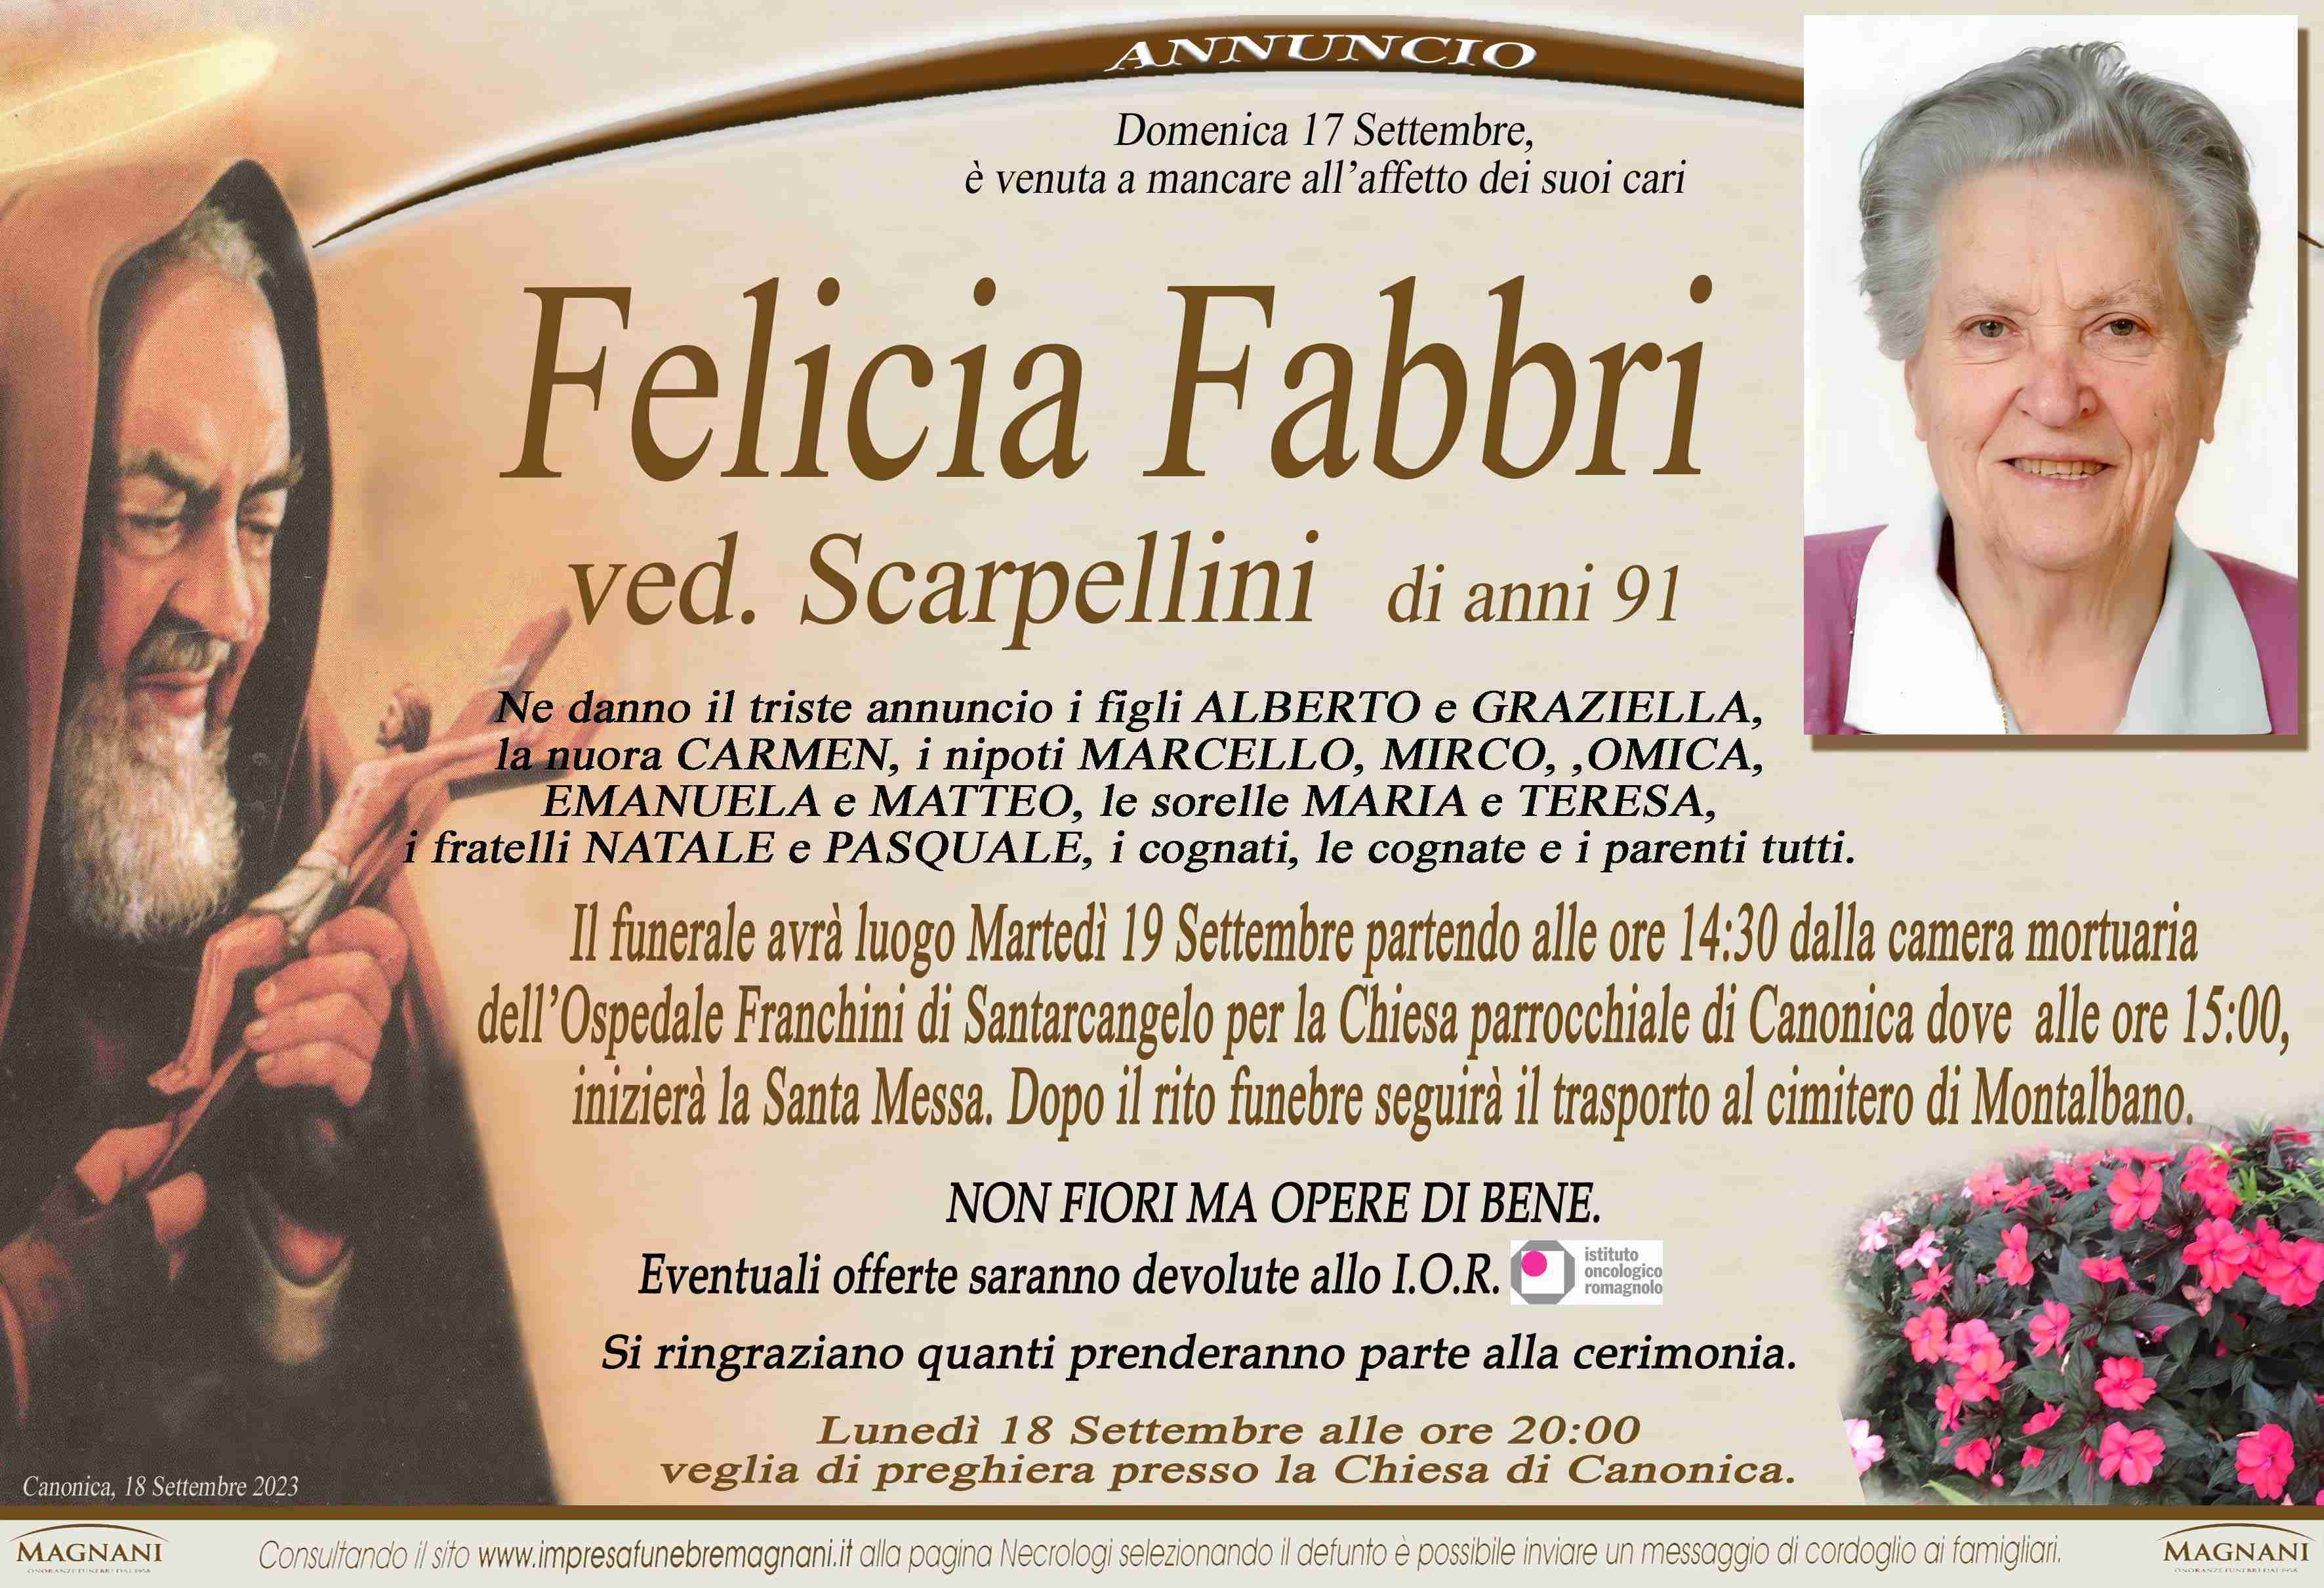 Felicia Fabbri